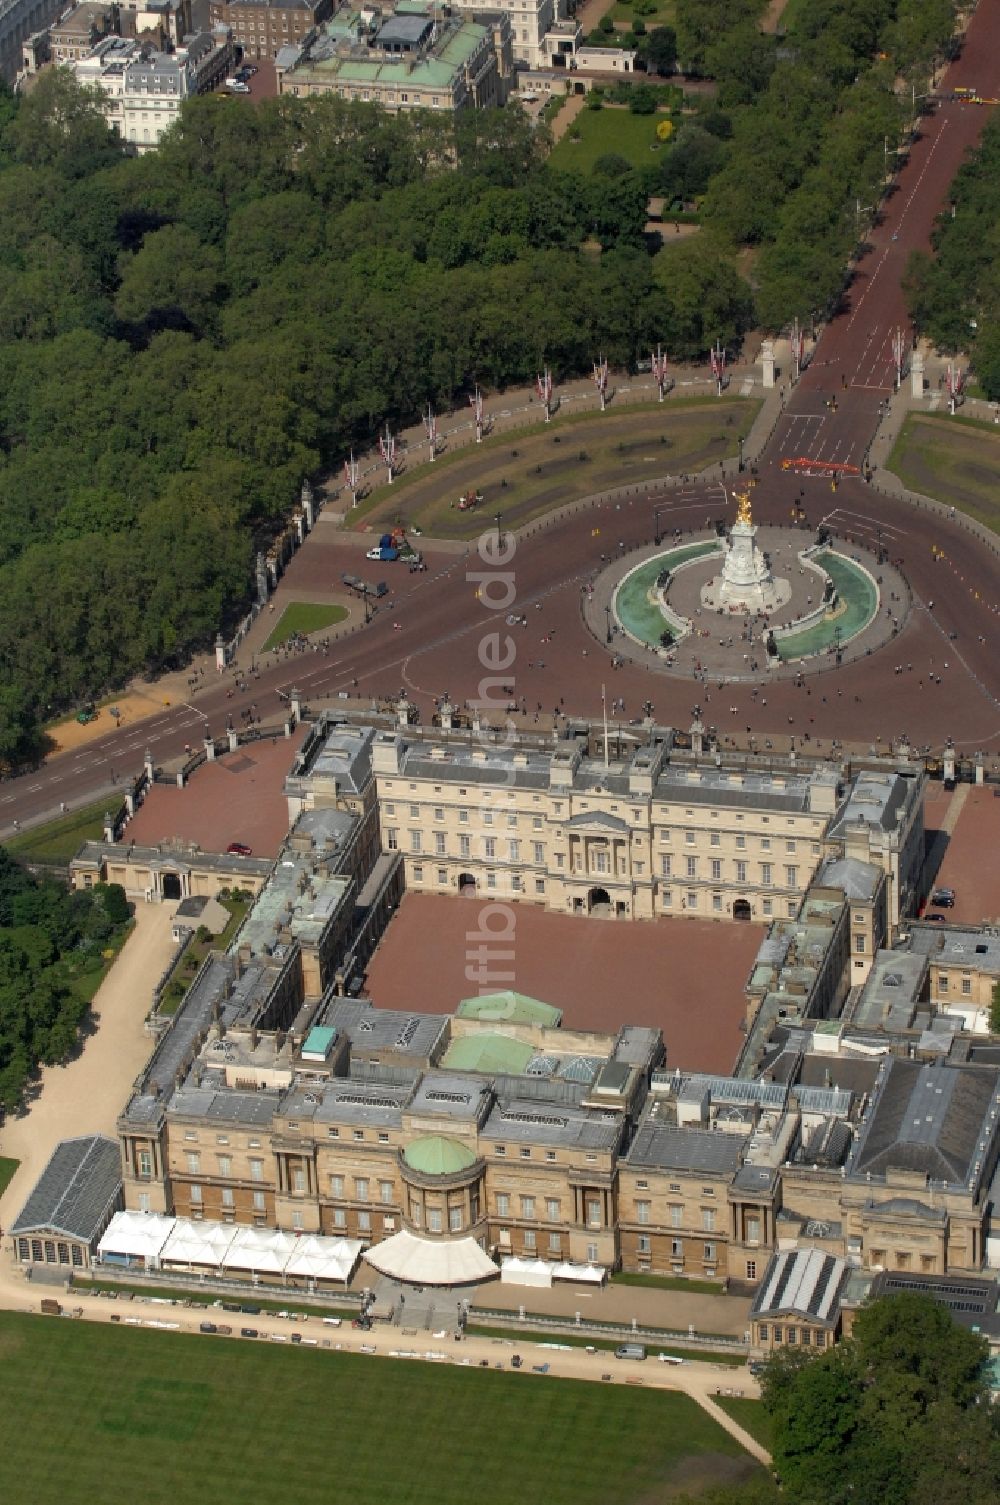 Luftaufnahme London - Buckingham Palace - der Palast Stadtbezirk City of Westminster in London